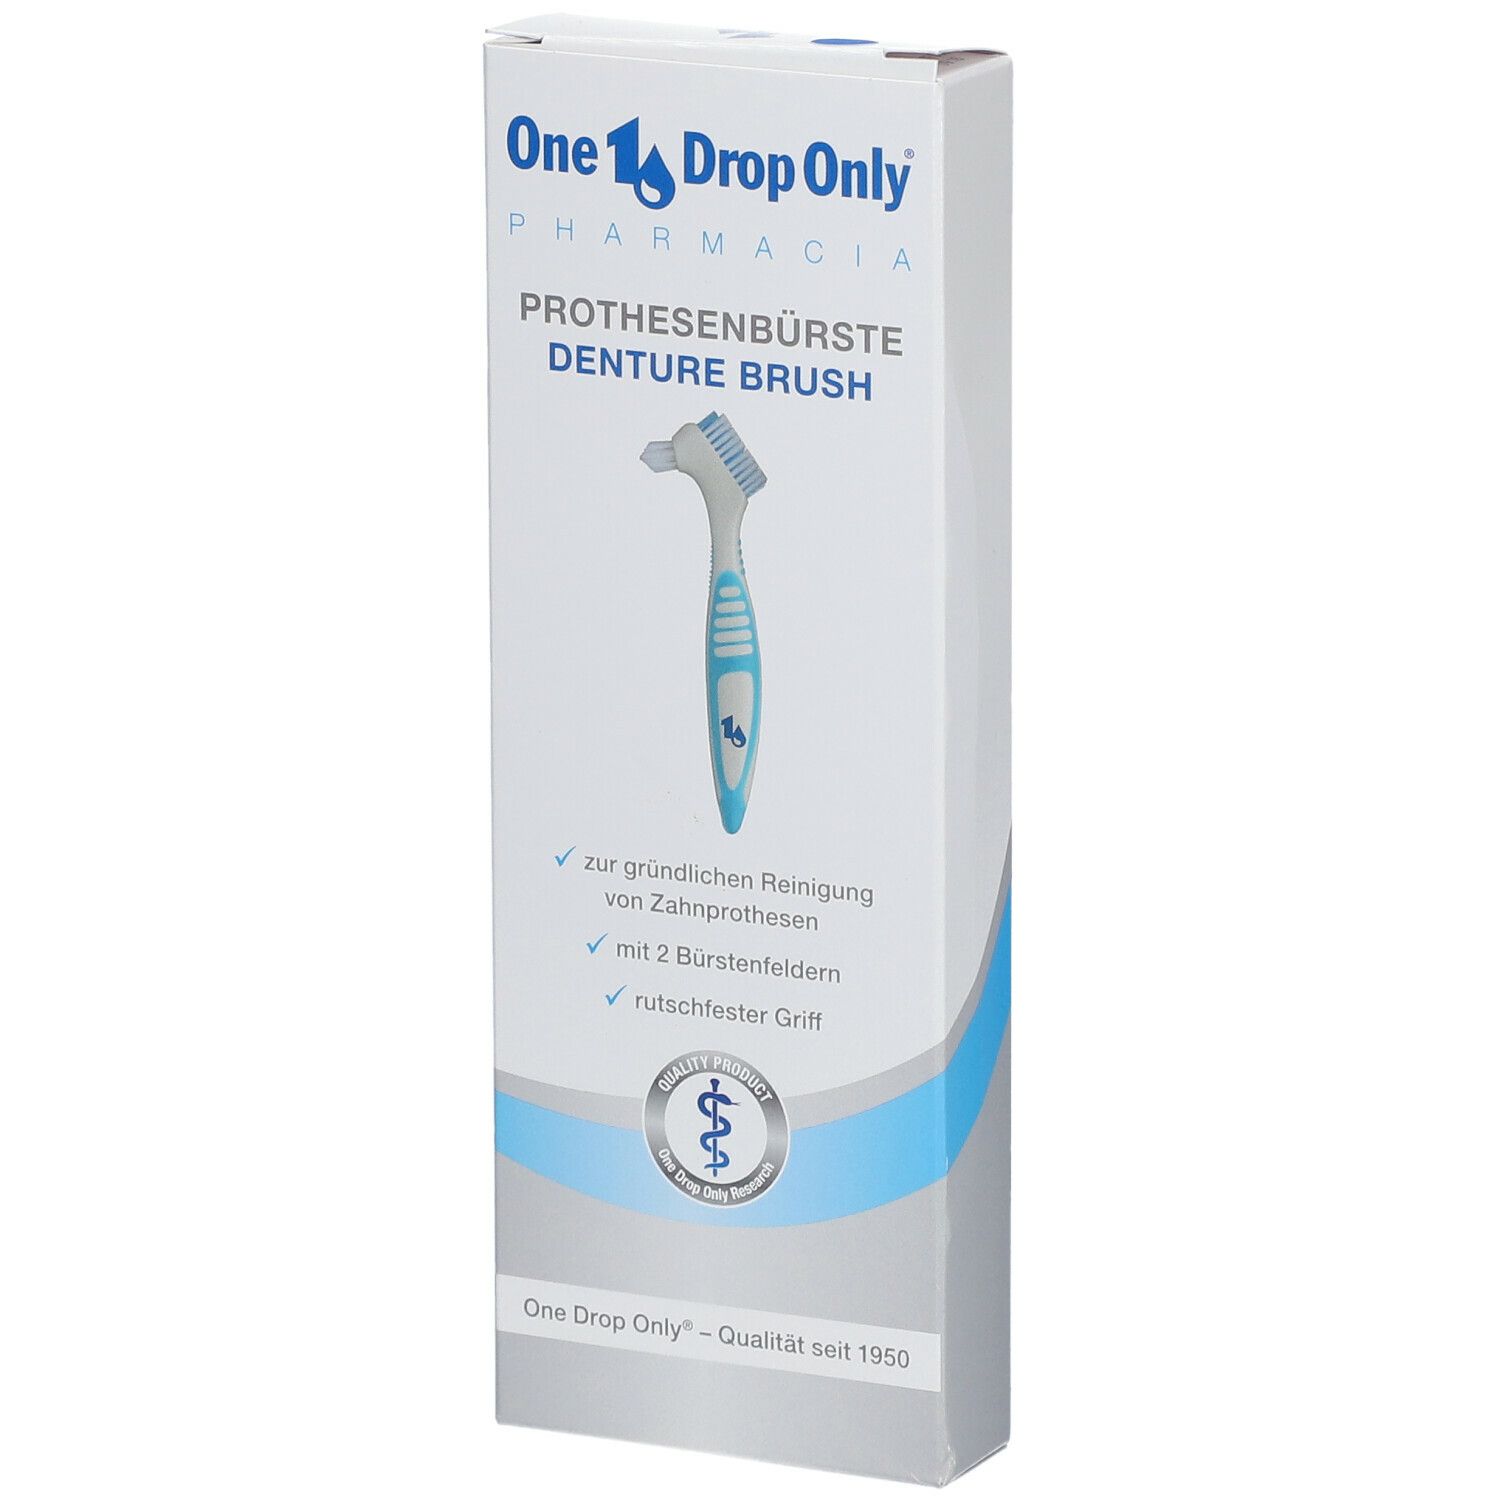 One Drop Only® Prothesenbürste